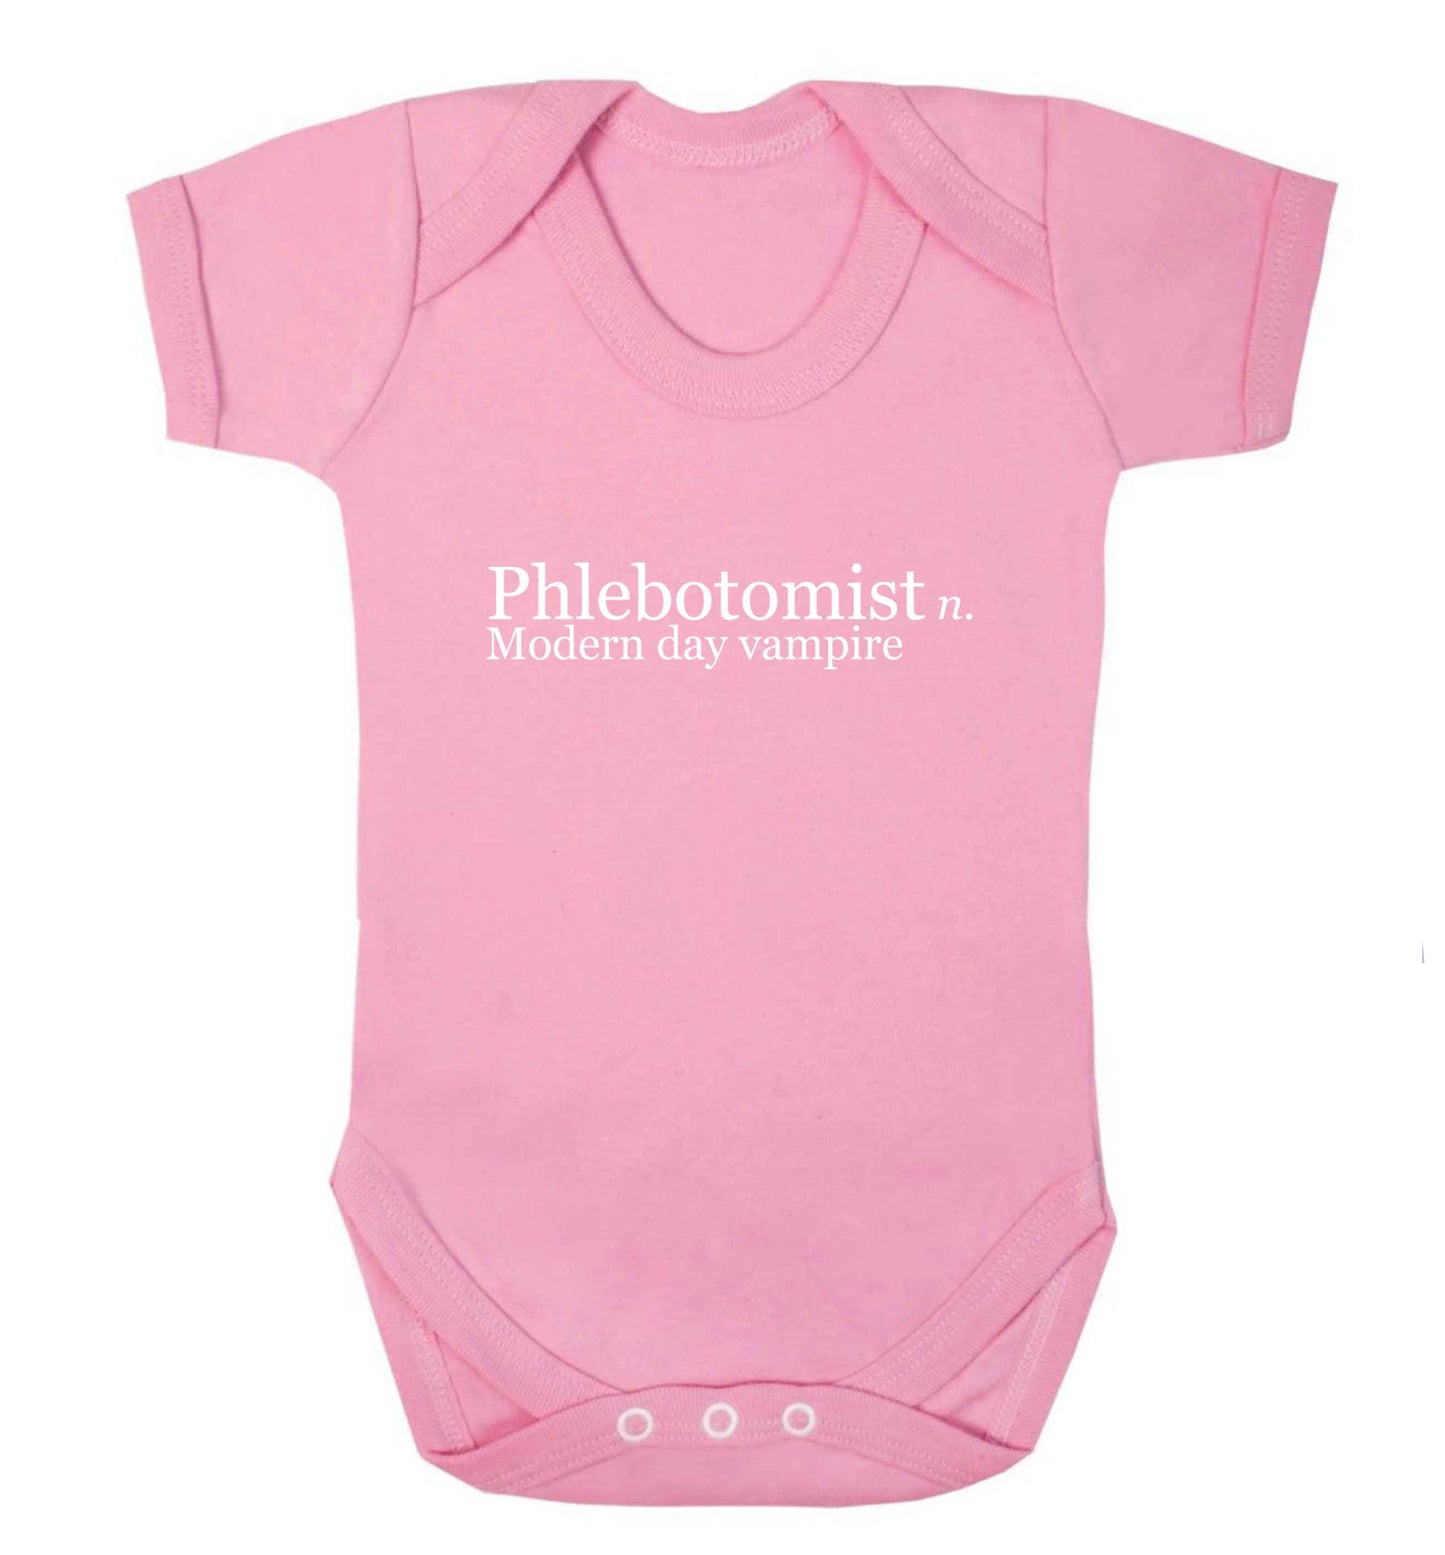 Phlebotomist - Modern day vampire baby vest pale pink 18-24 months